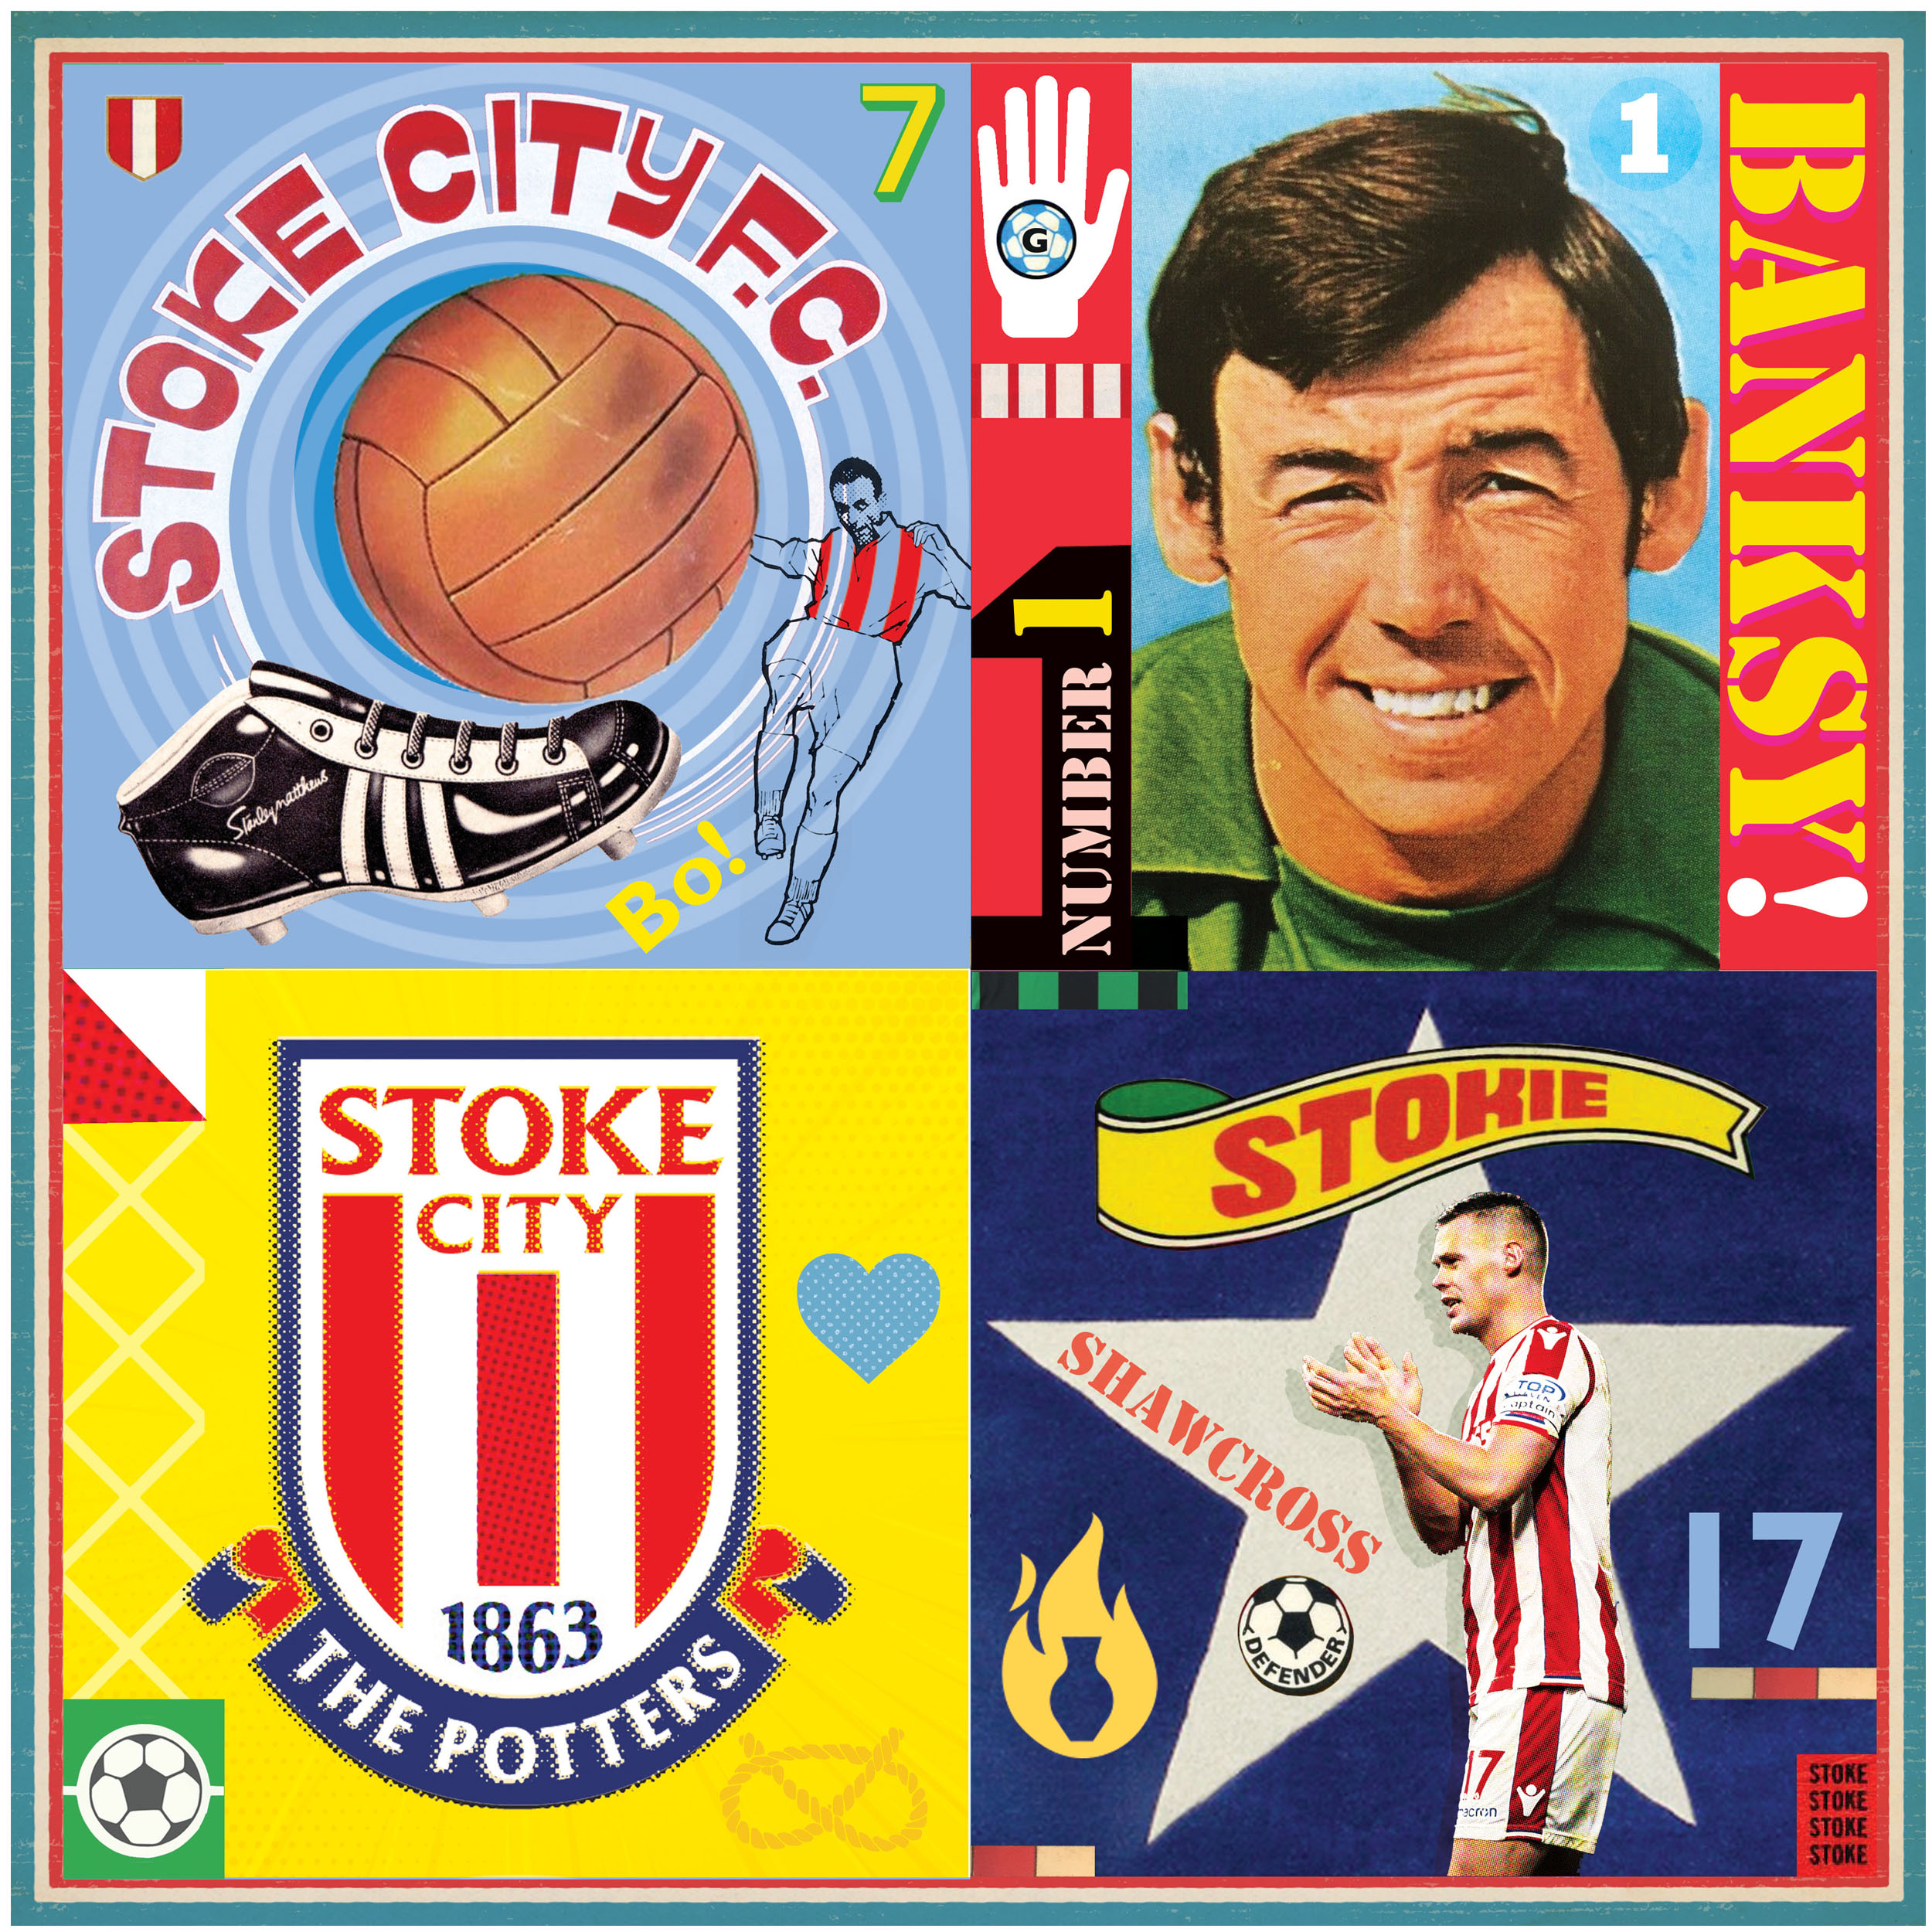 Stoke City Collage Illustration using Football memorabilia, Soccer legends including Gordon Banks an Sir Stanley Matthews in a Pop Art style.